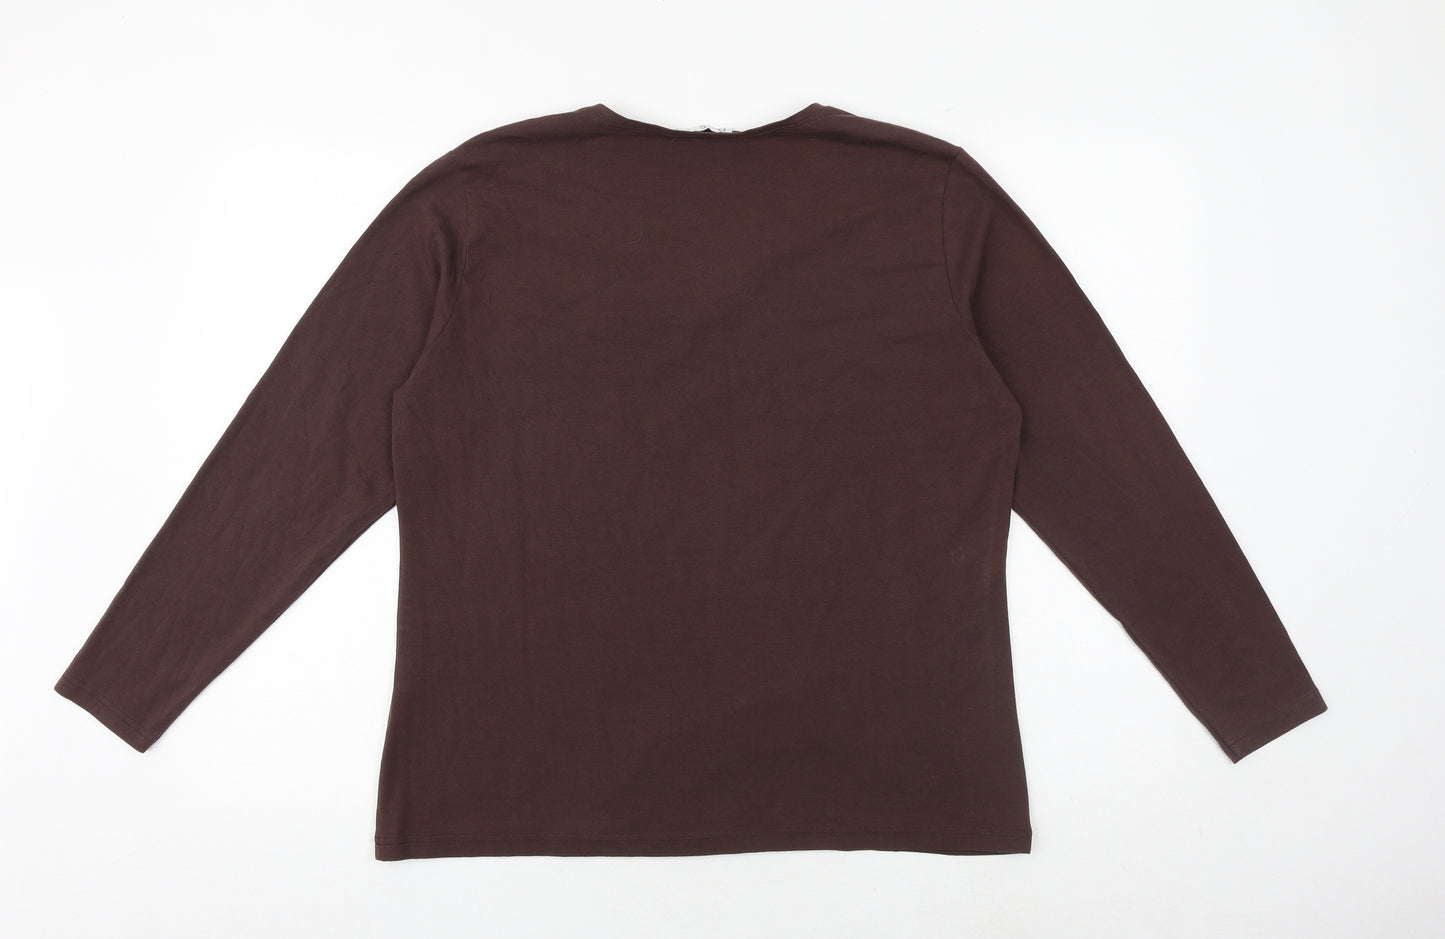 Oscar B. Womens Brown Cotton Basic T-Shirt Size L V-Neck